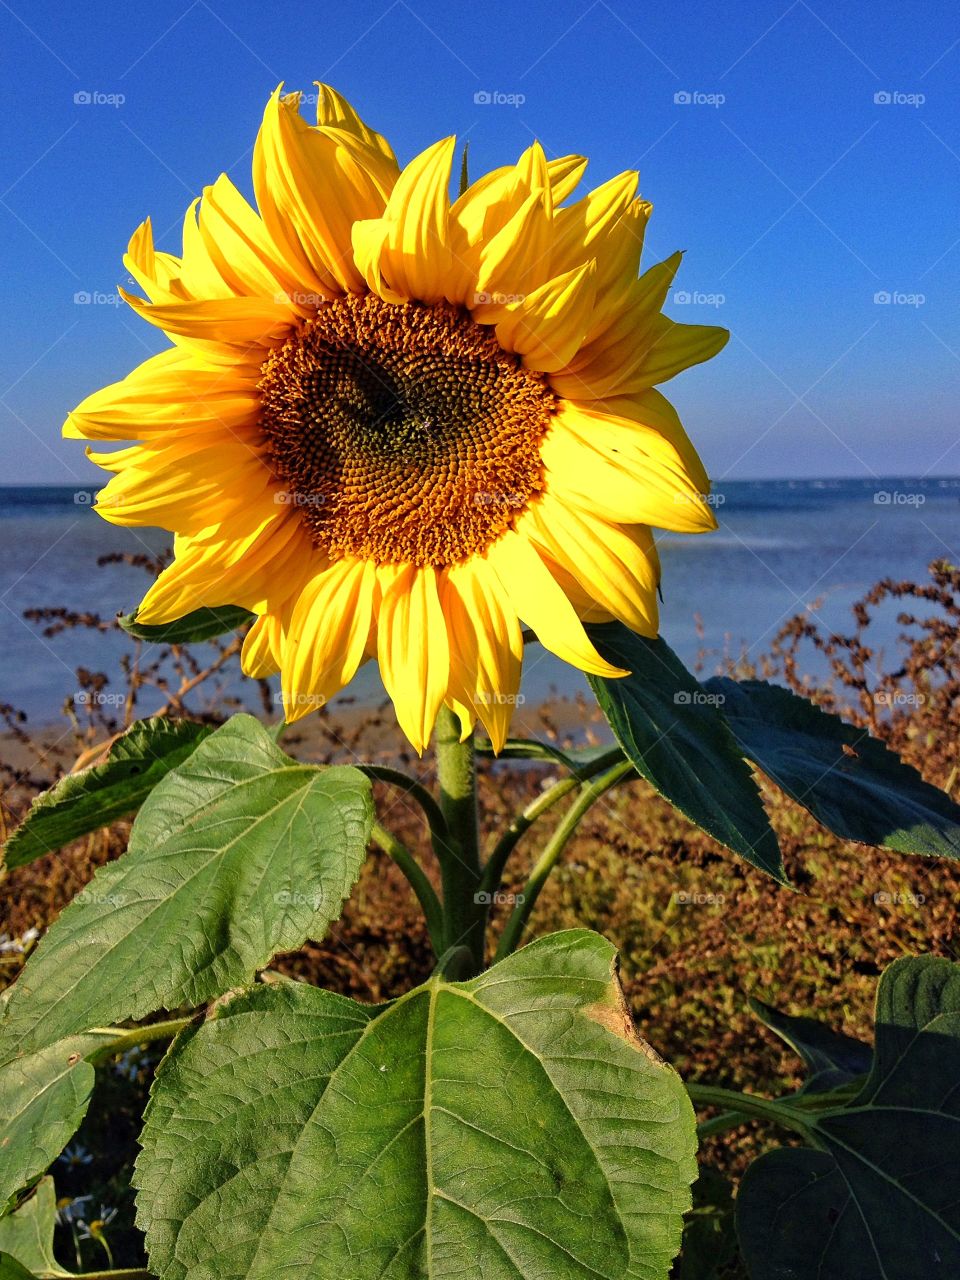 Sun flower by the sea